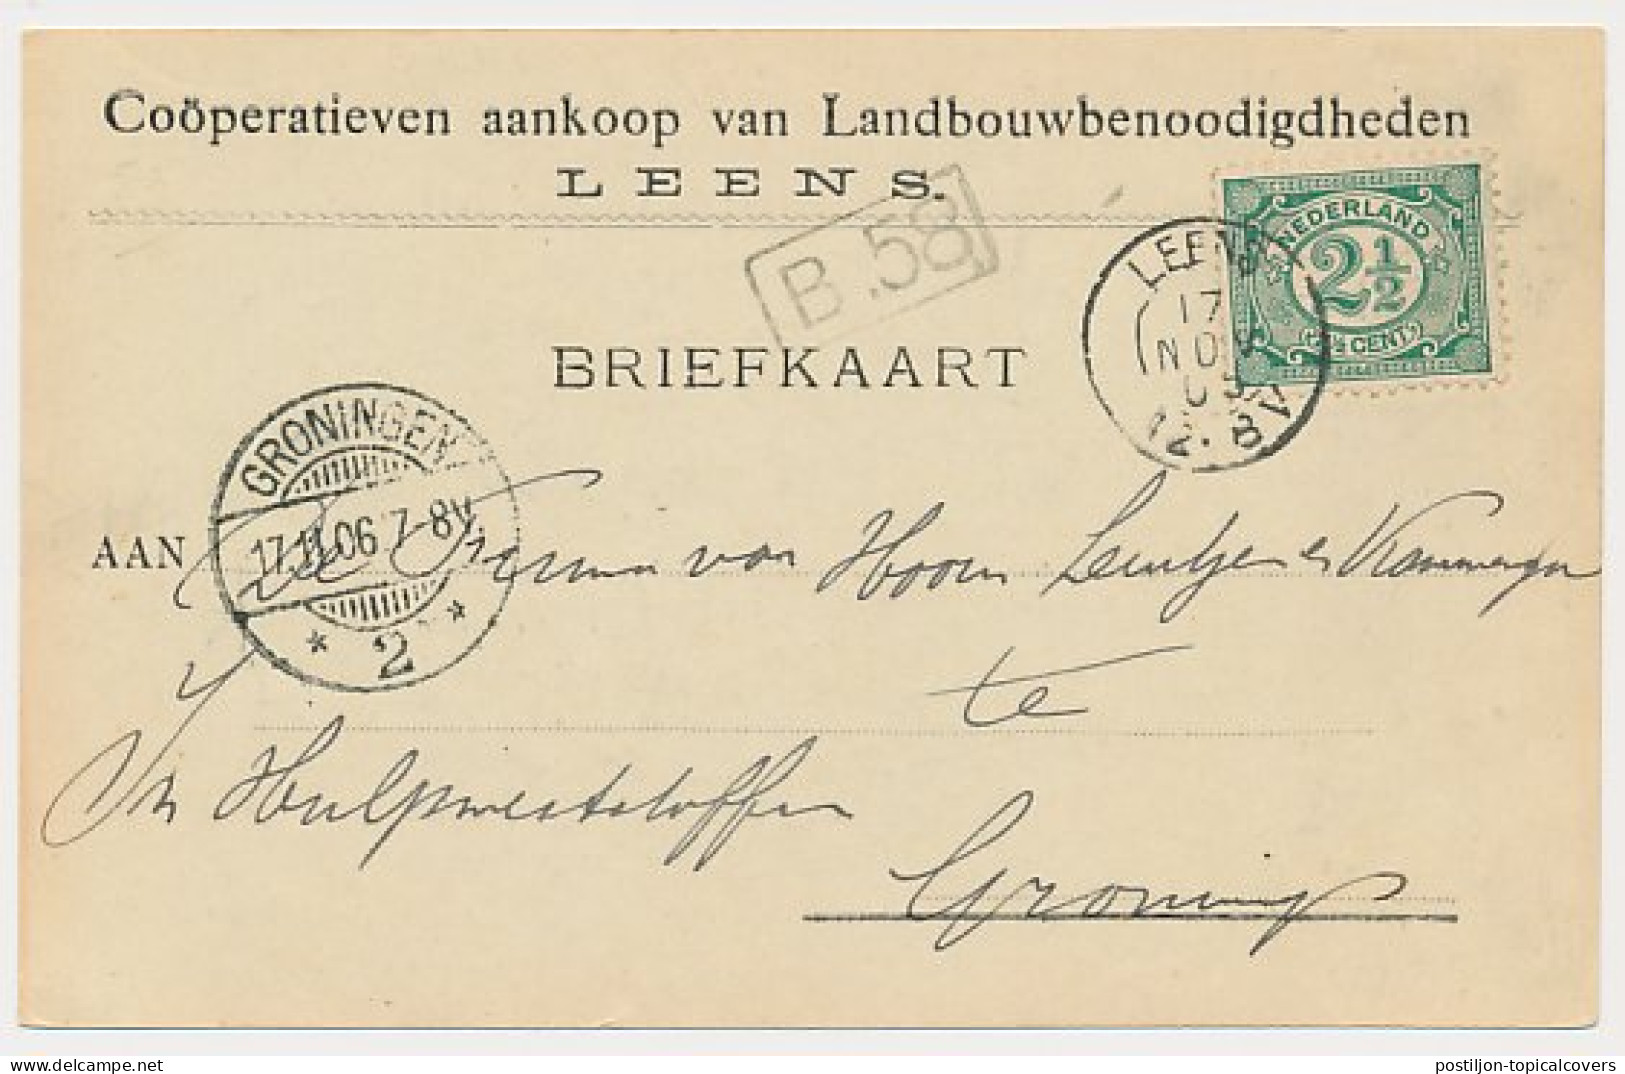 Kleinrondstempel Leens 1906 - Unclassified